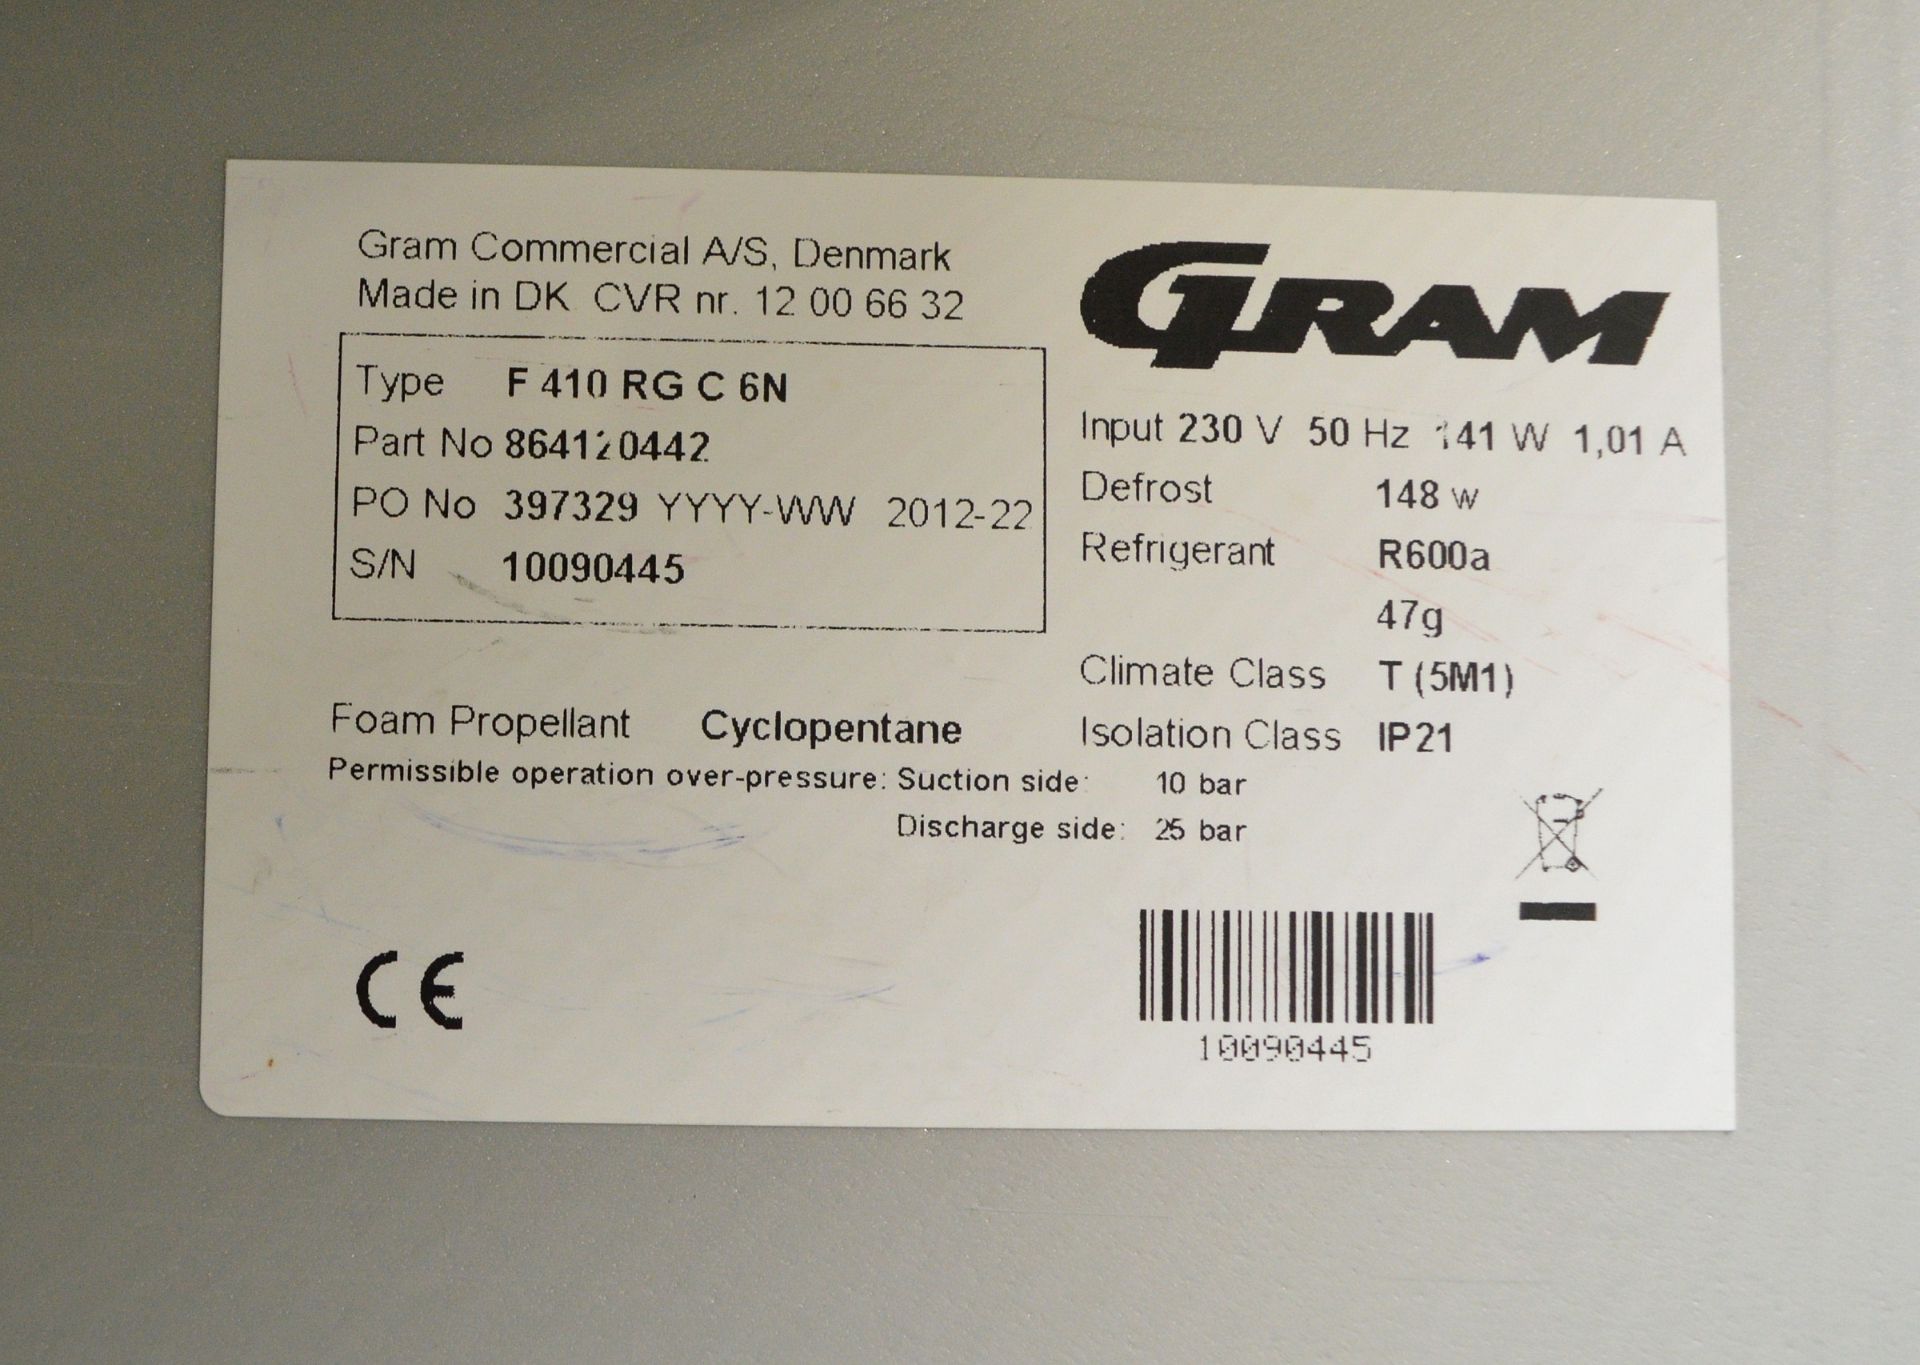 Gram F410 RG C 6N Stainless Steel Upright Freezer - Image 6 of 6